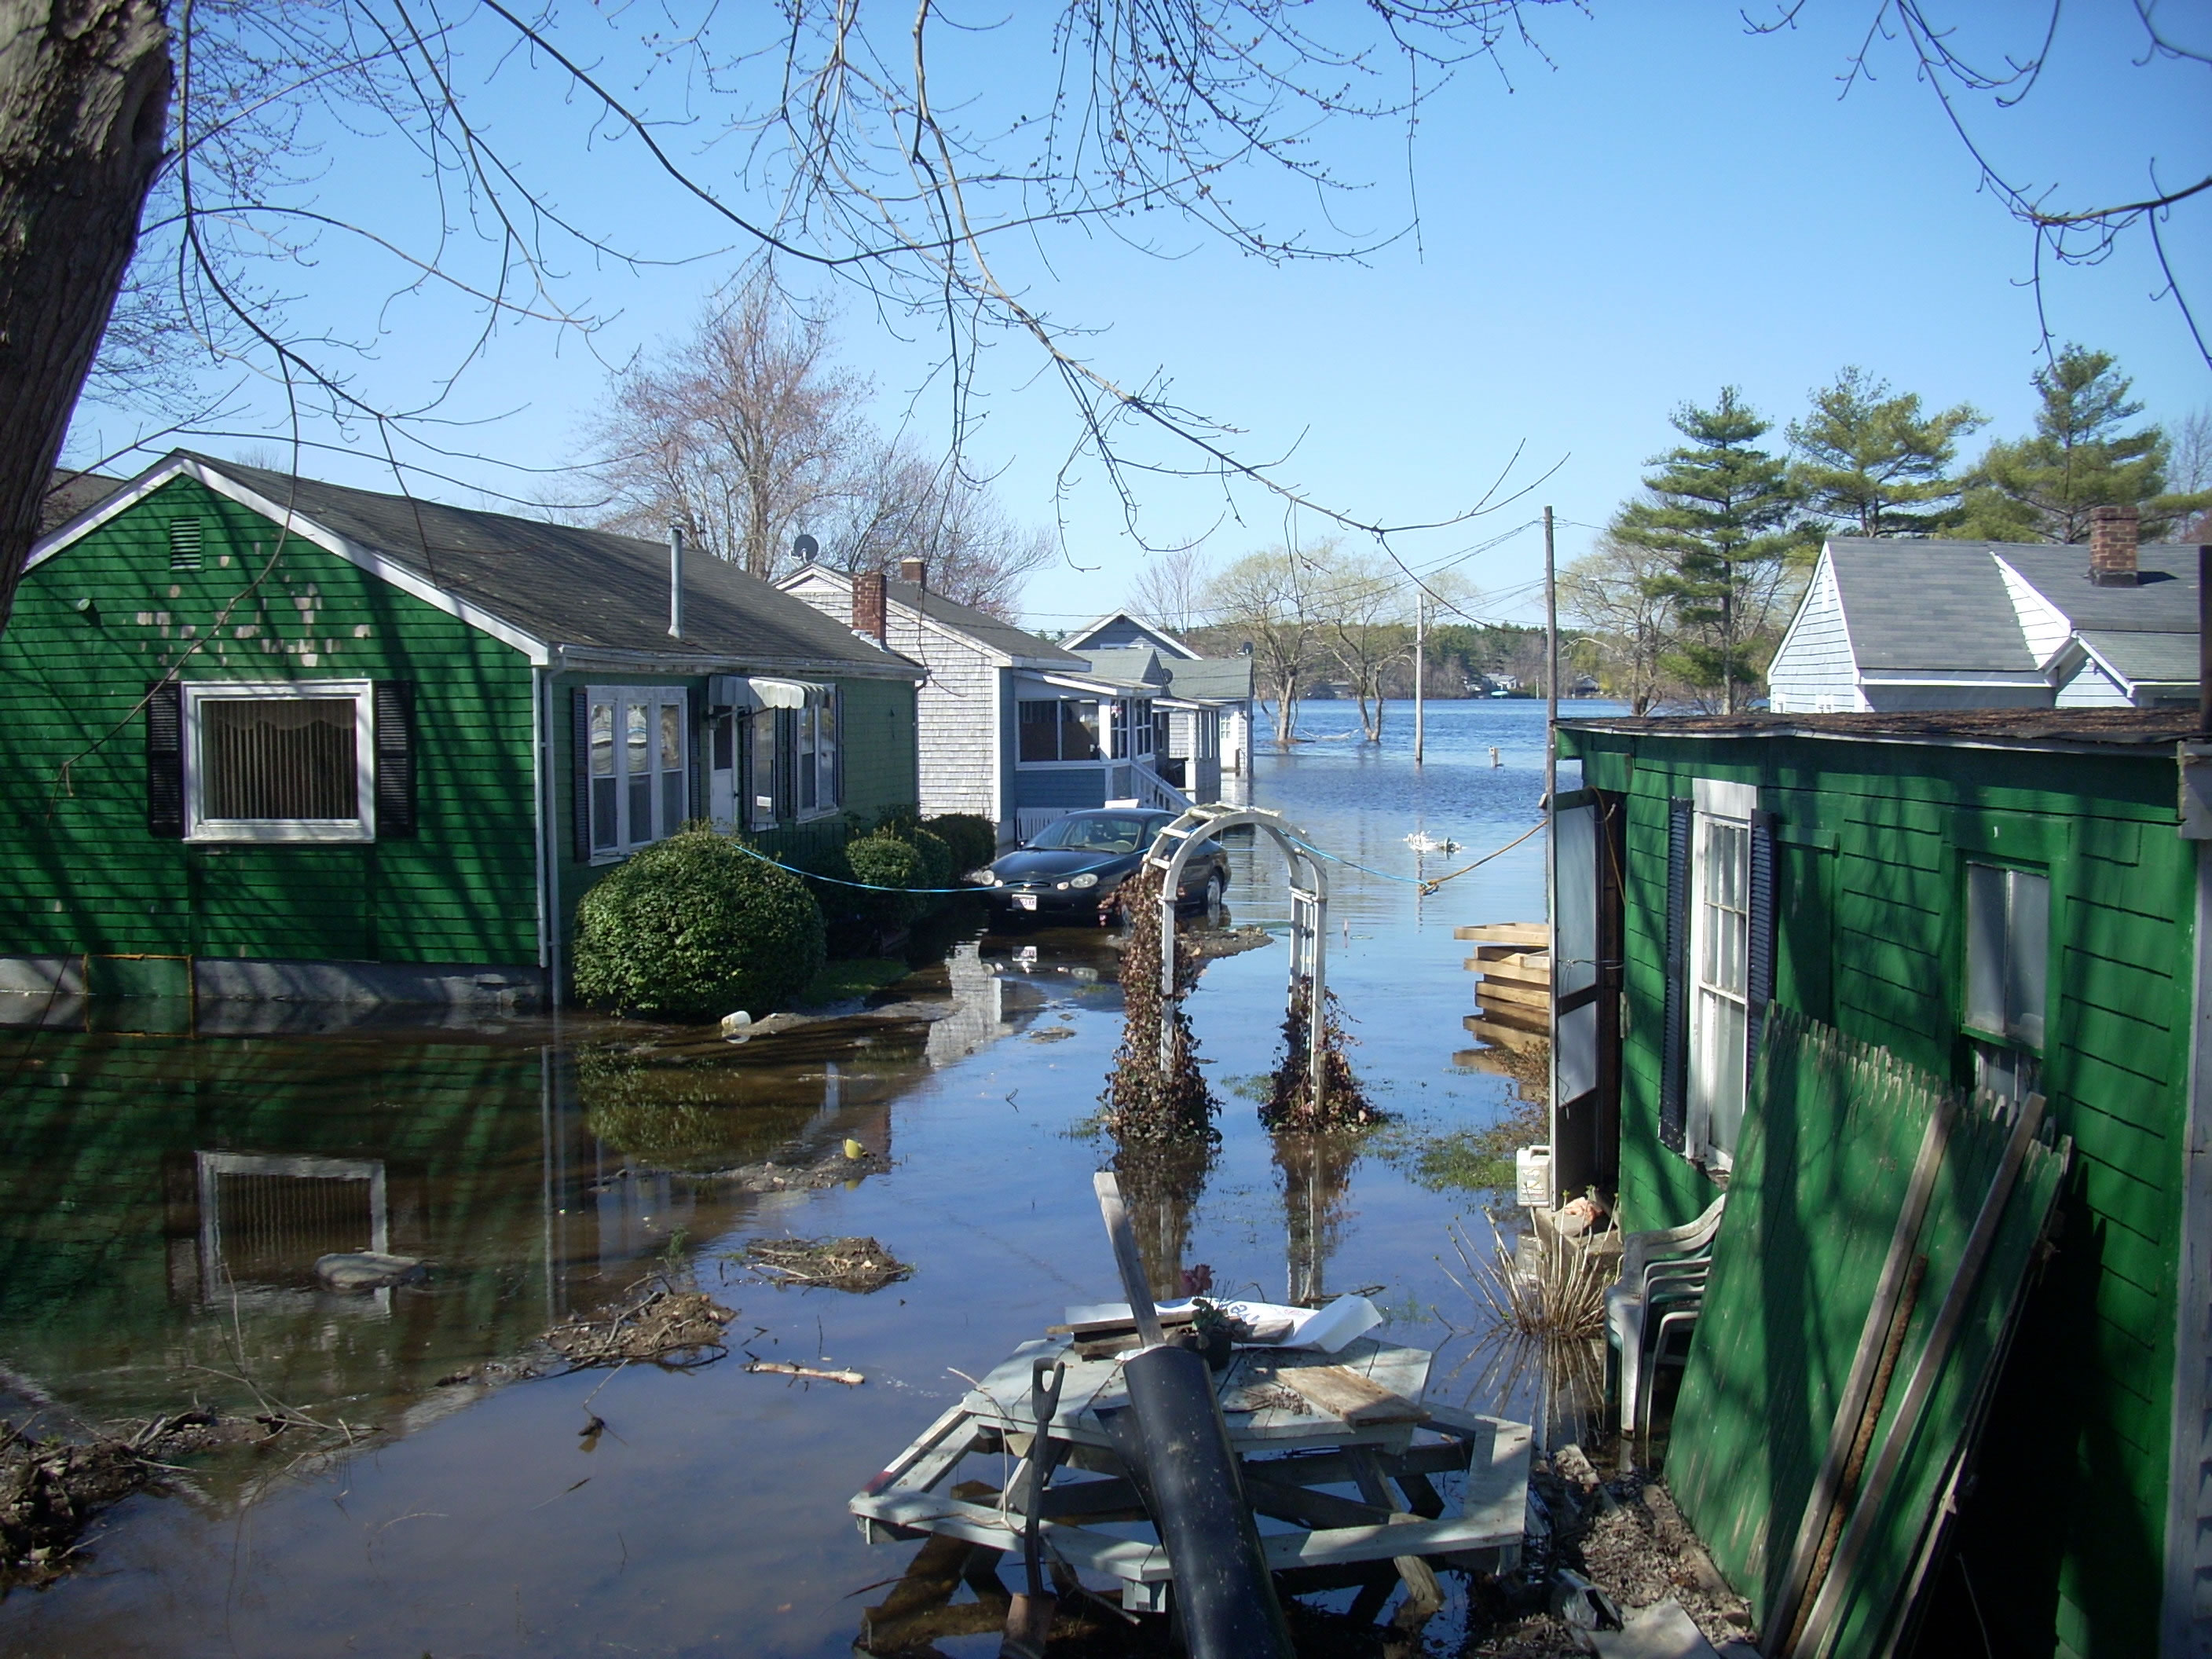 Another Lakeville Flood photo taken nearer the boat landing